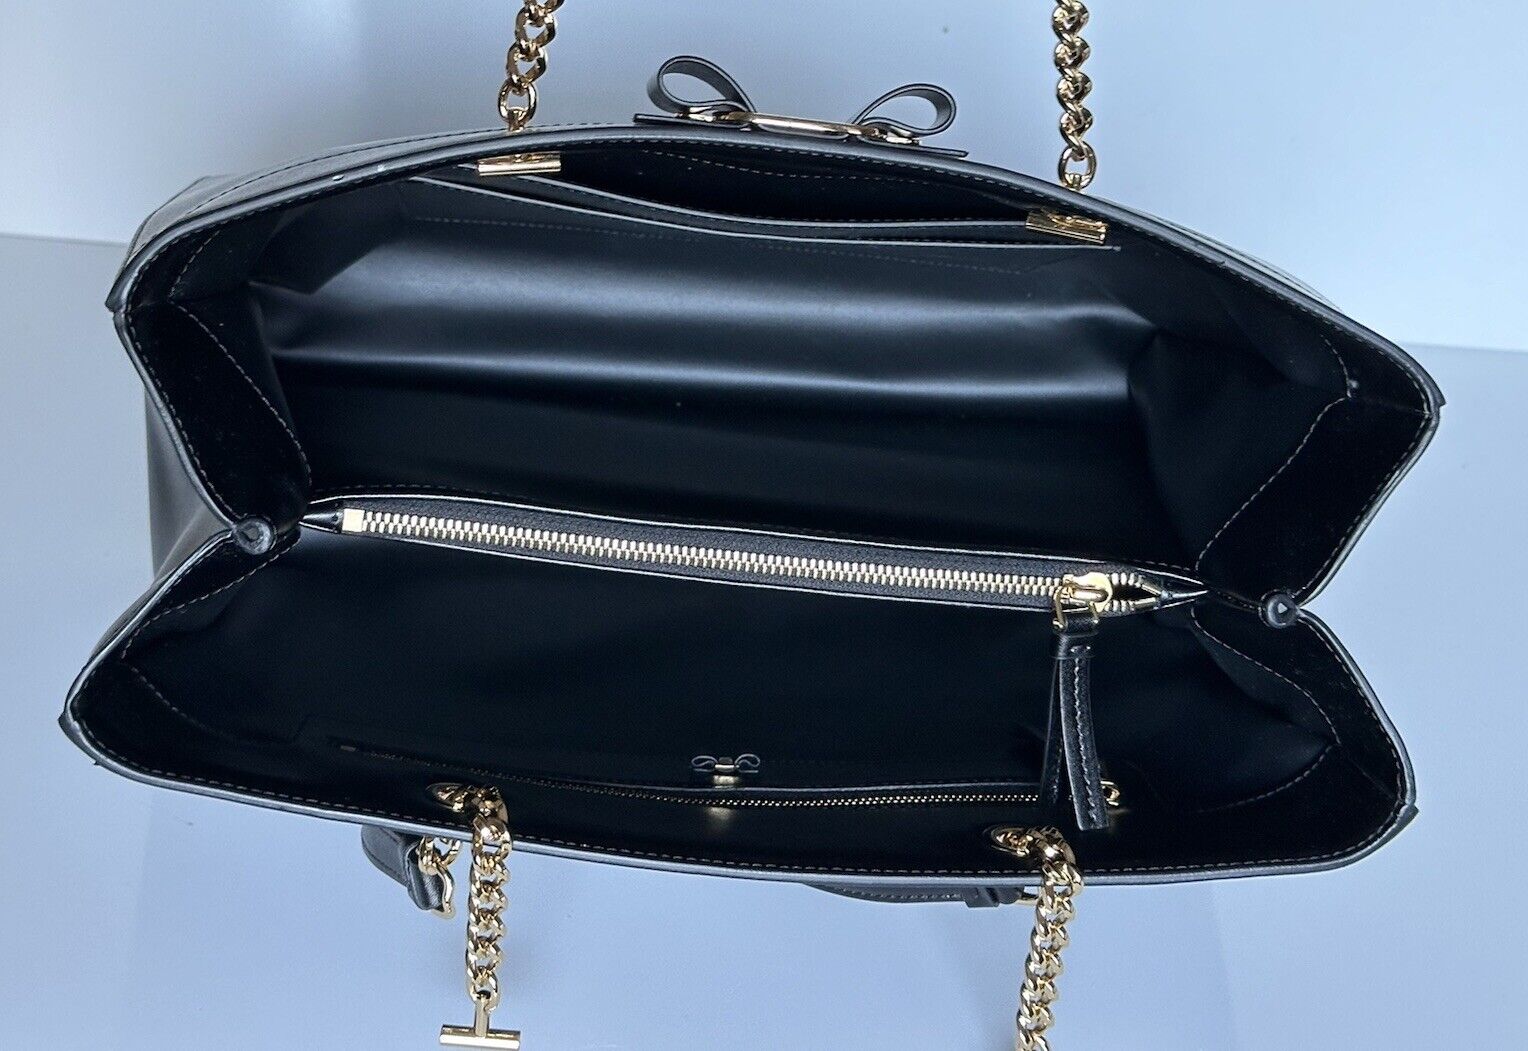 NWT $1590 Salvatore Ferragamo Leather Tote Shoulder Bag Black 0753248 Italy